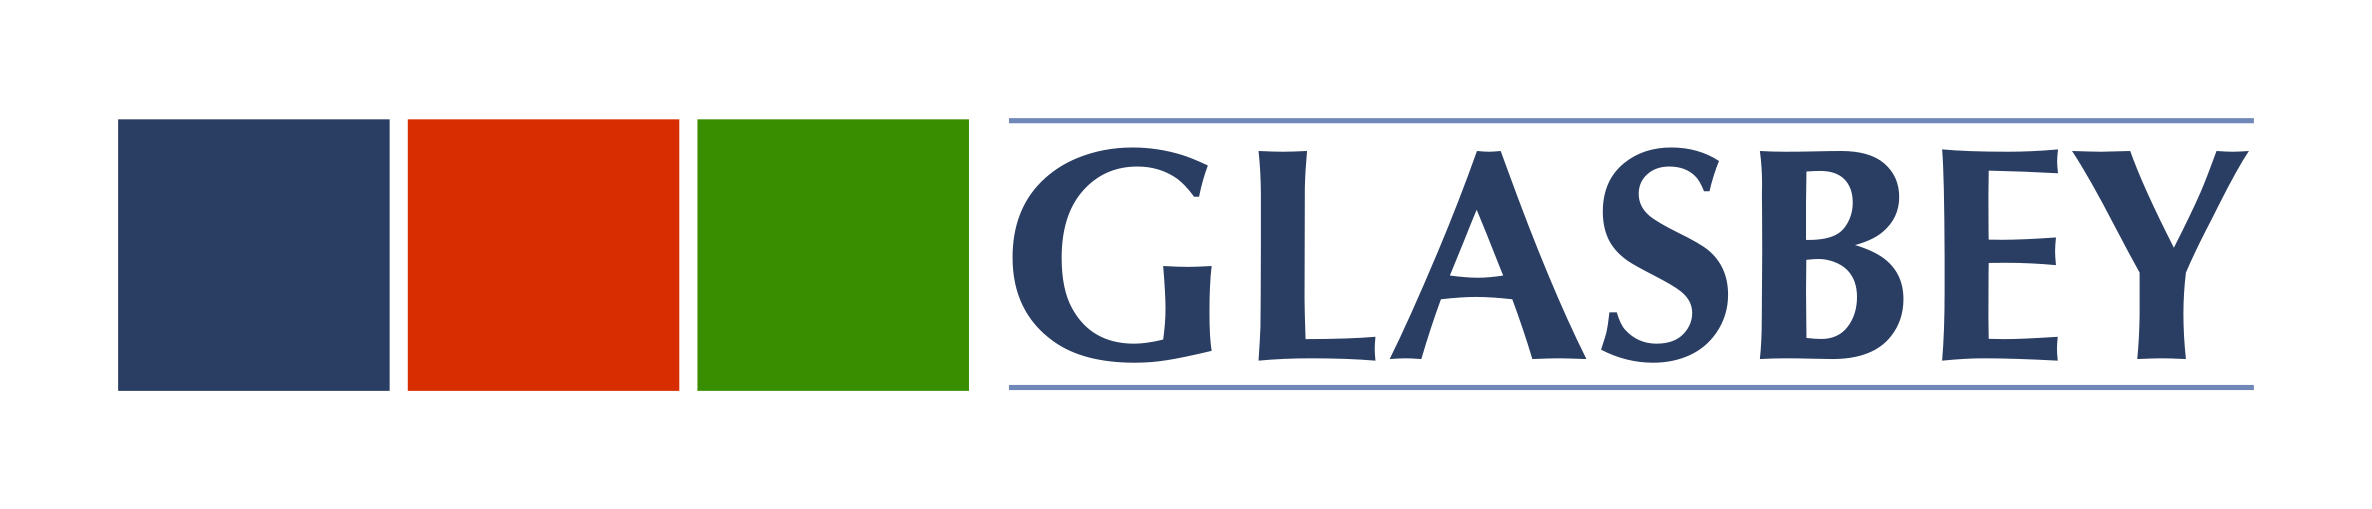 glasbey_logo.png